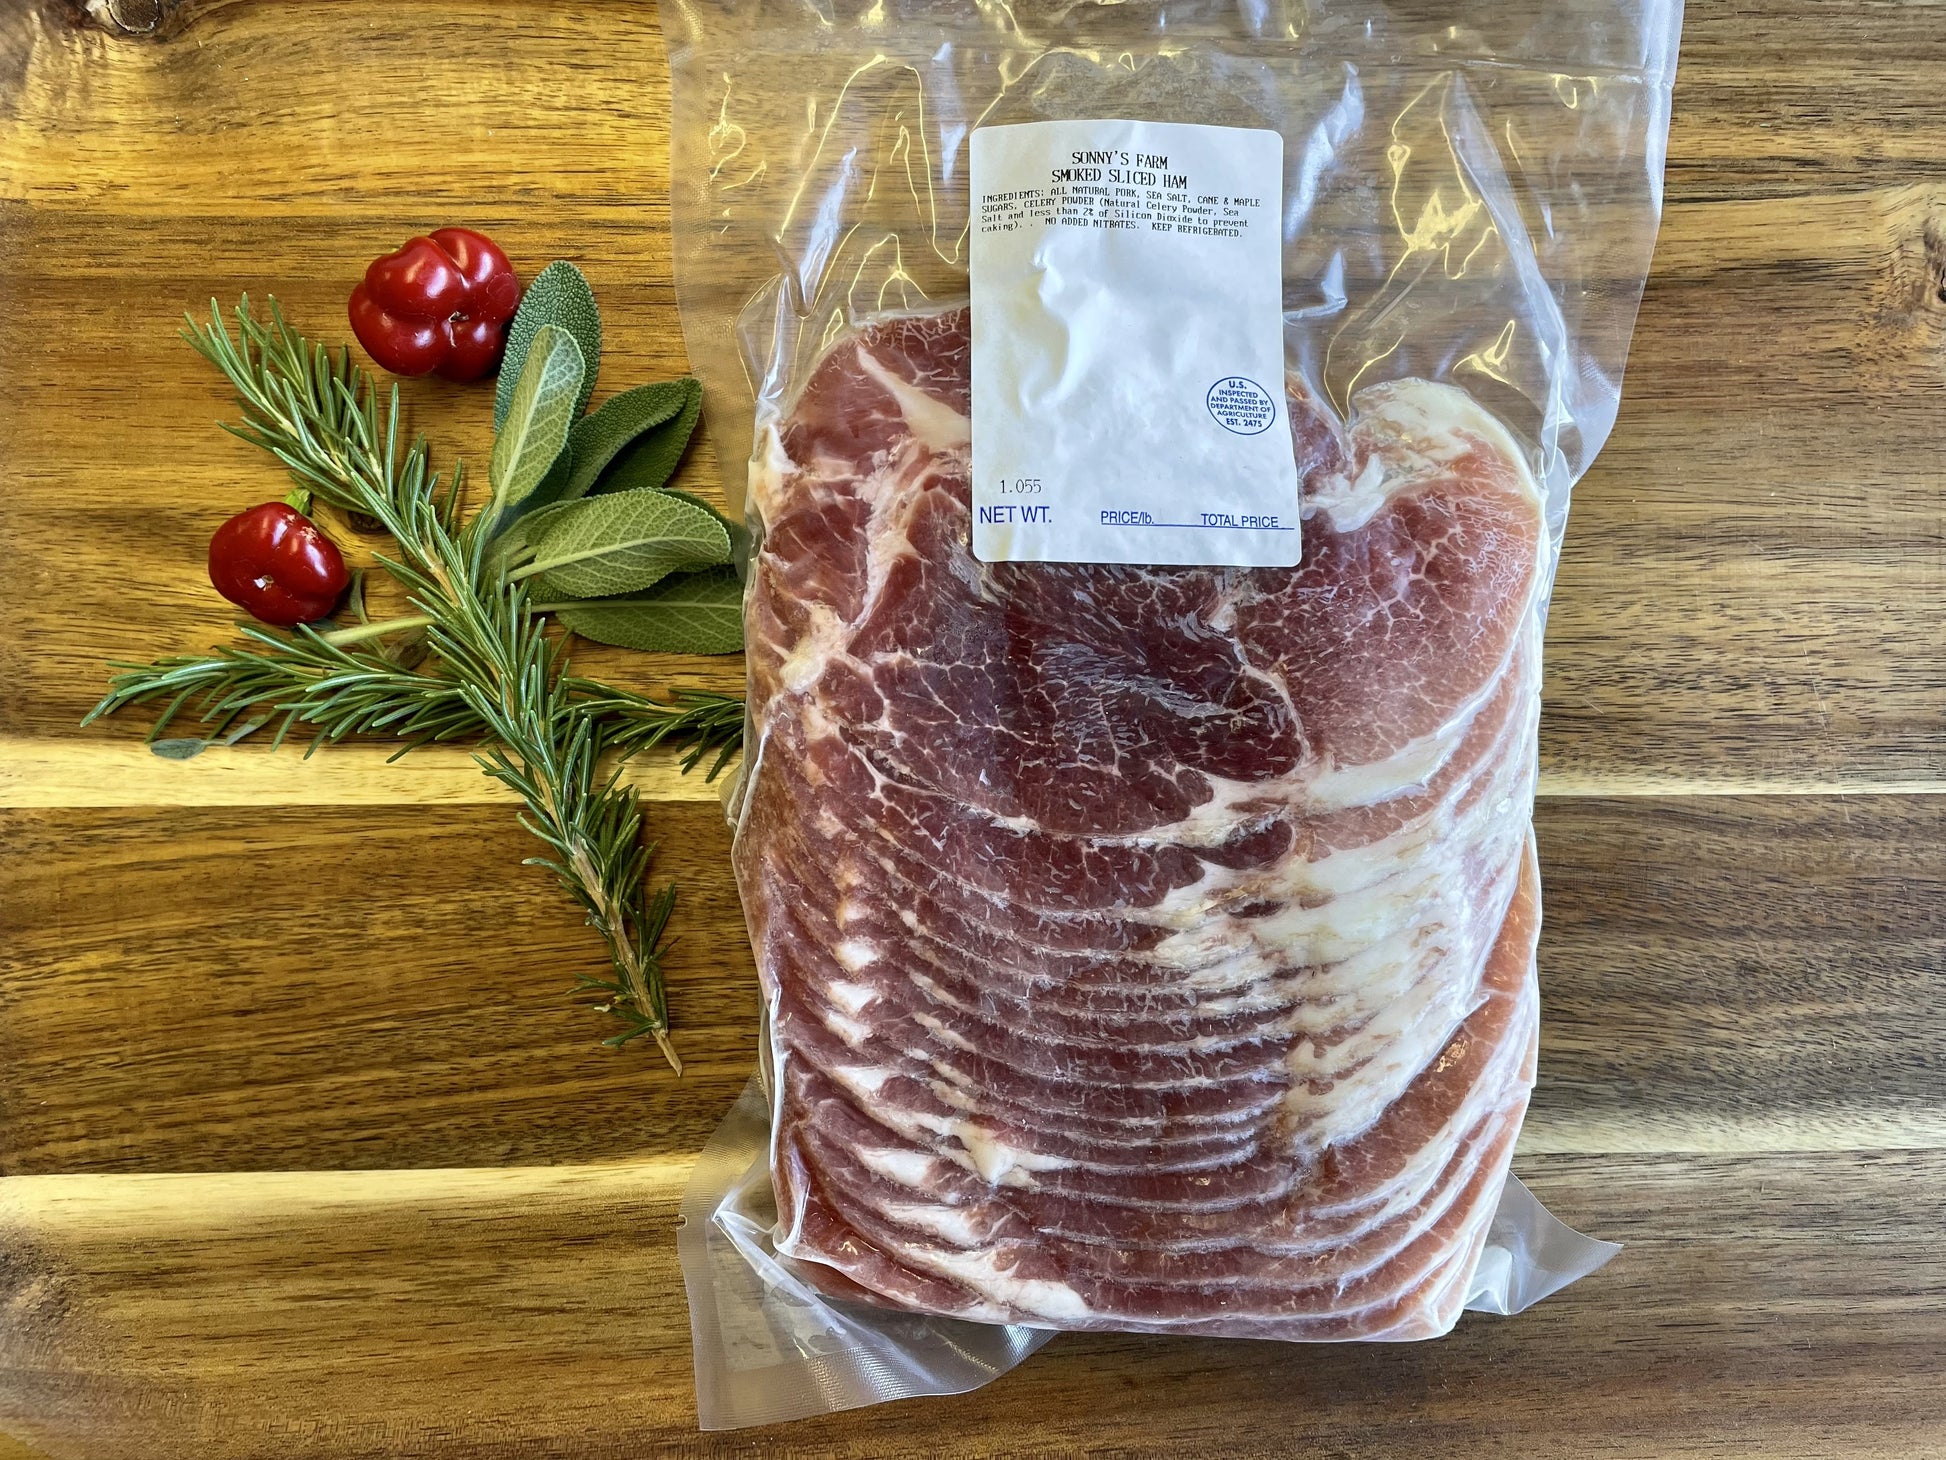 Sonny's Farm Pastured Pork Deli-Sliced Smoked Ham